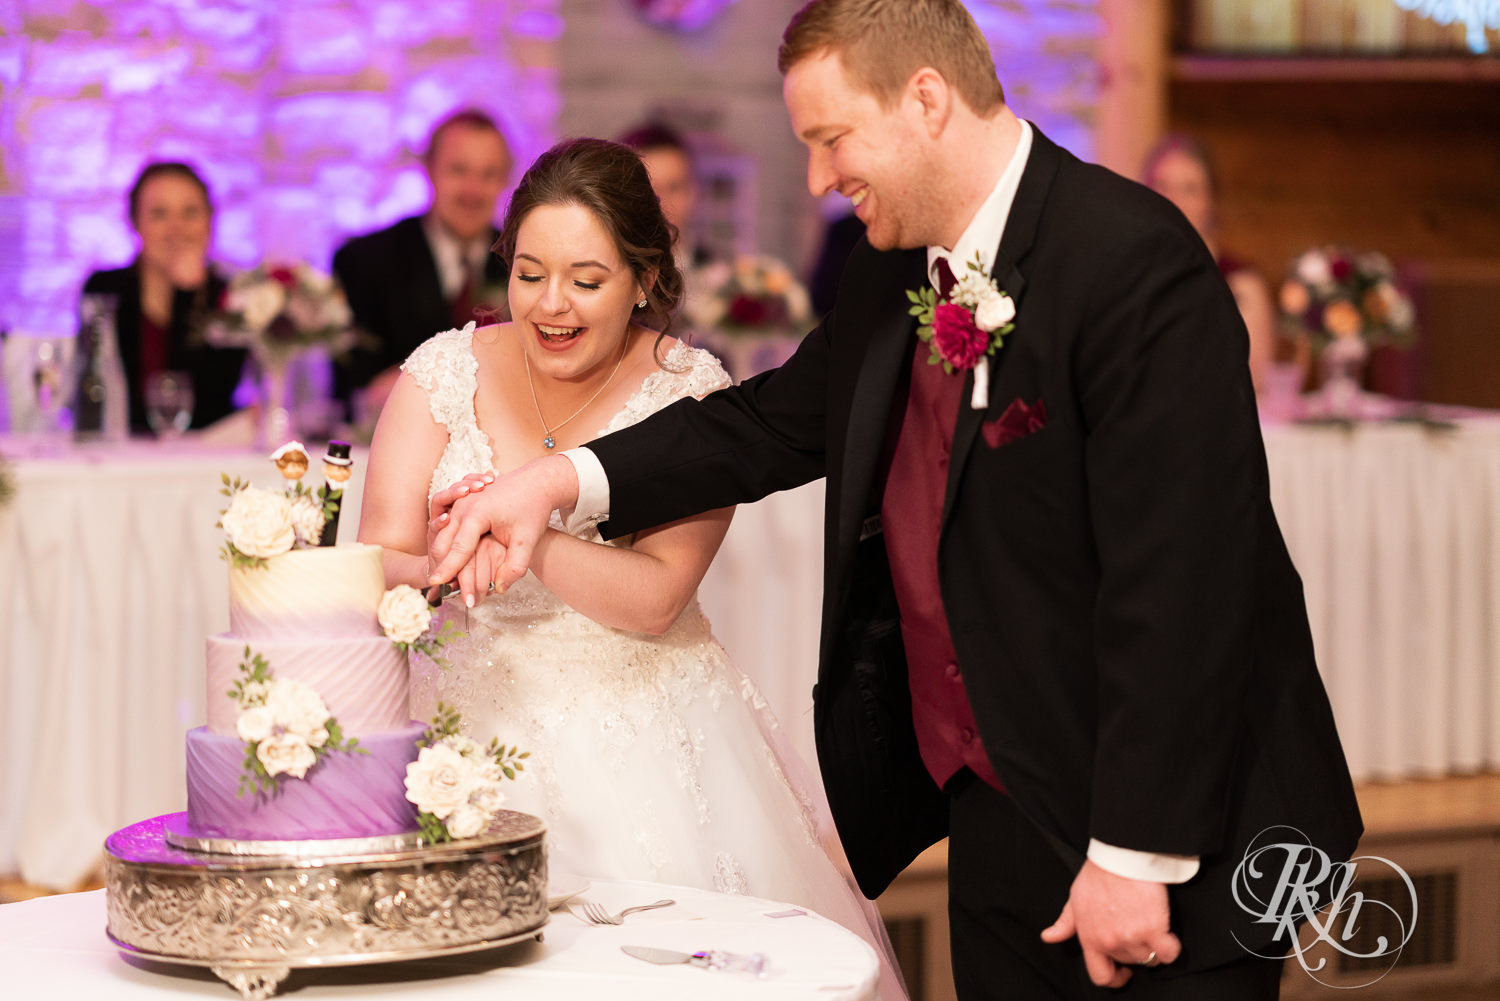 Bride and groom cut cake at wedding reception at Glenhaven Events in Farmington, Minnesota.